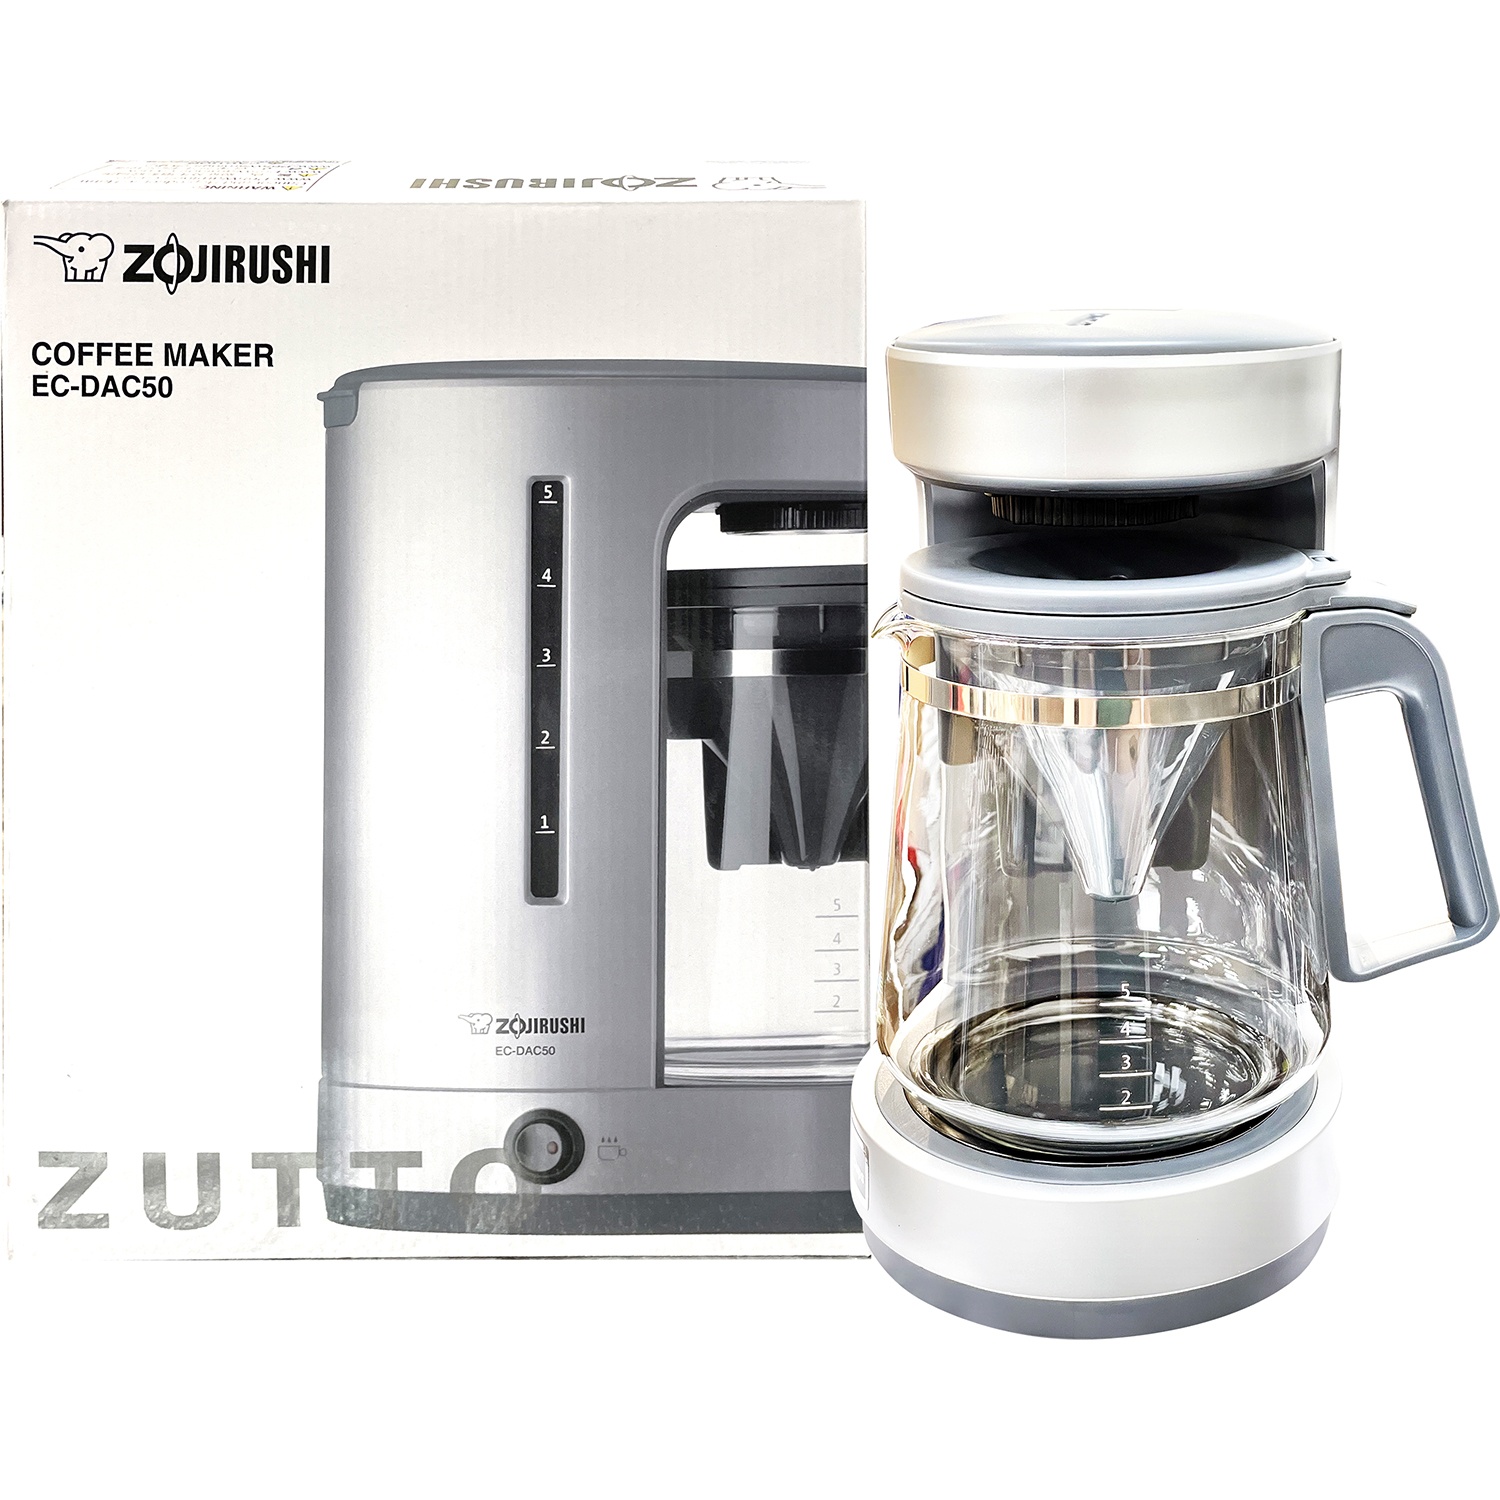 Zojirushi Zutto 5-Cup Coffee Maker + Reviews